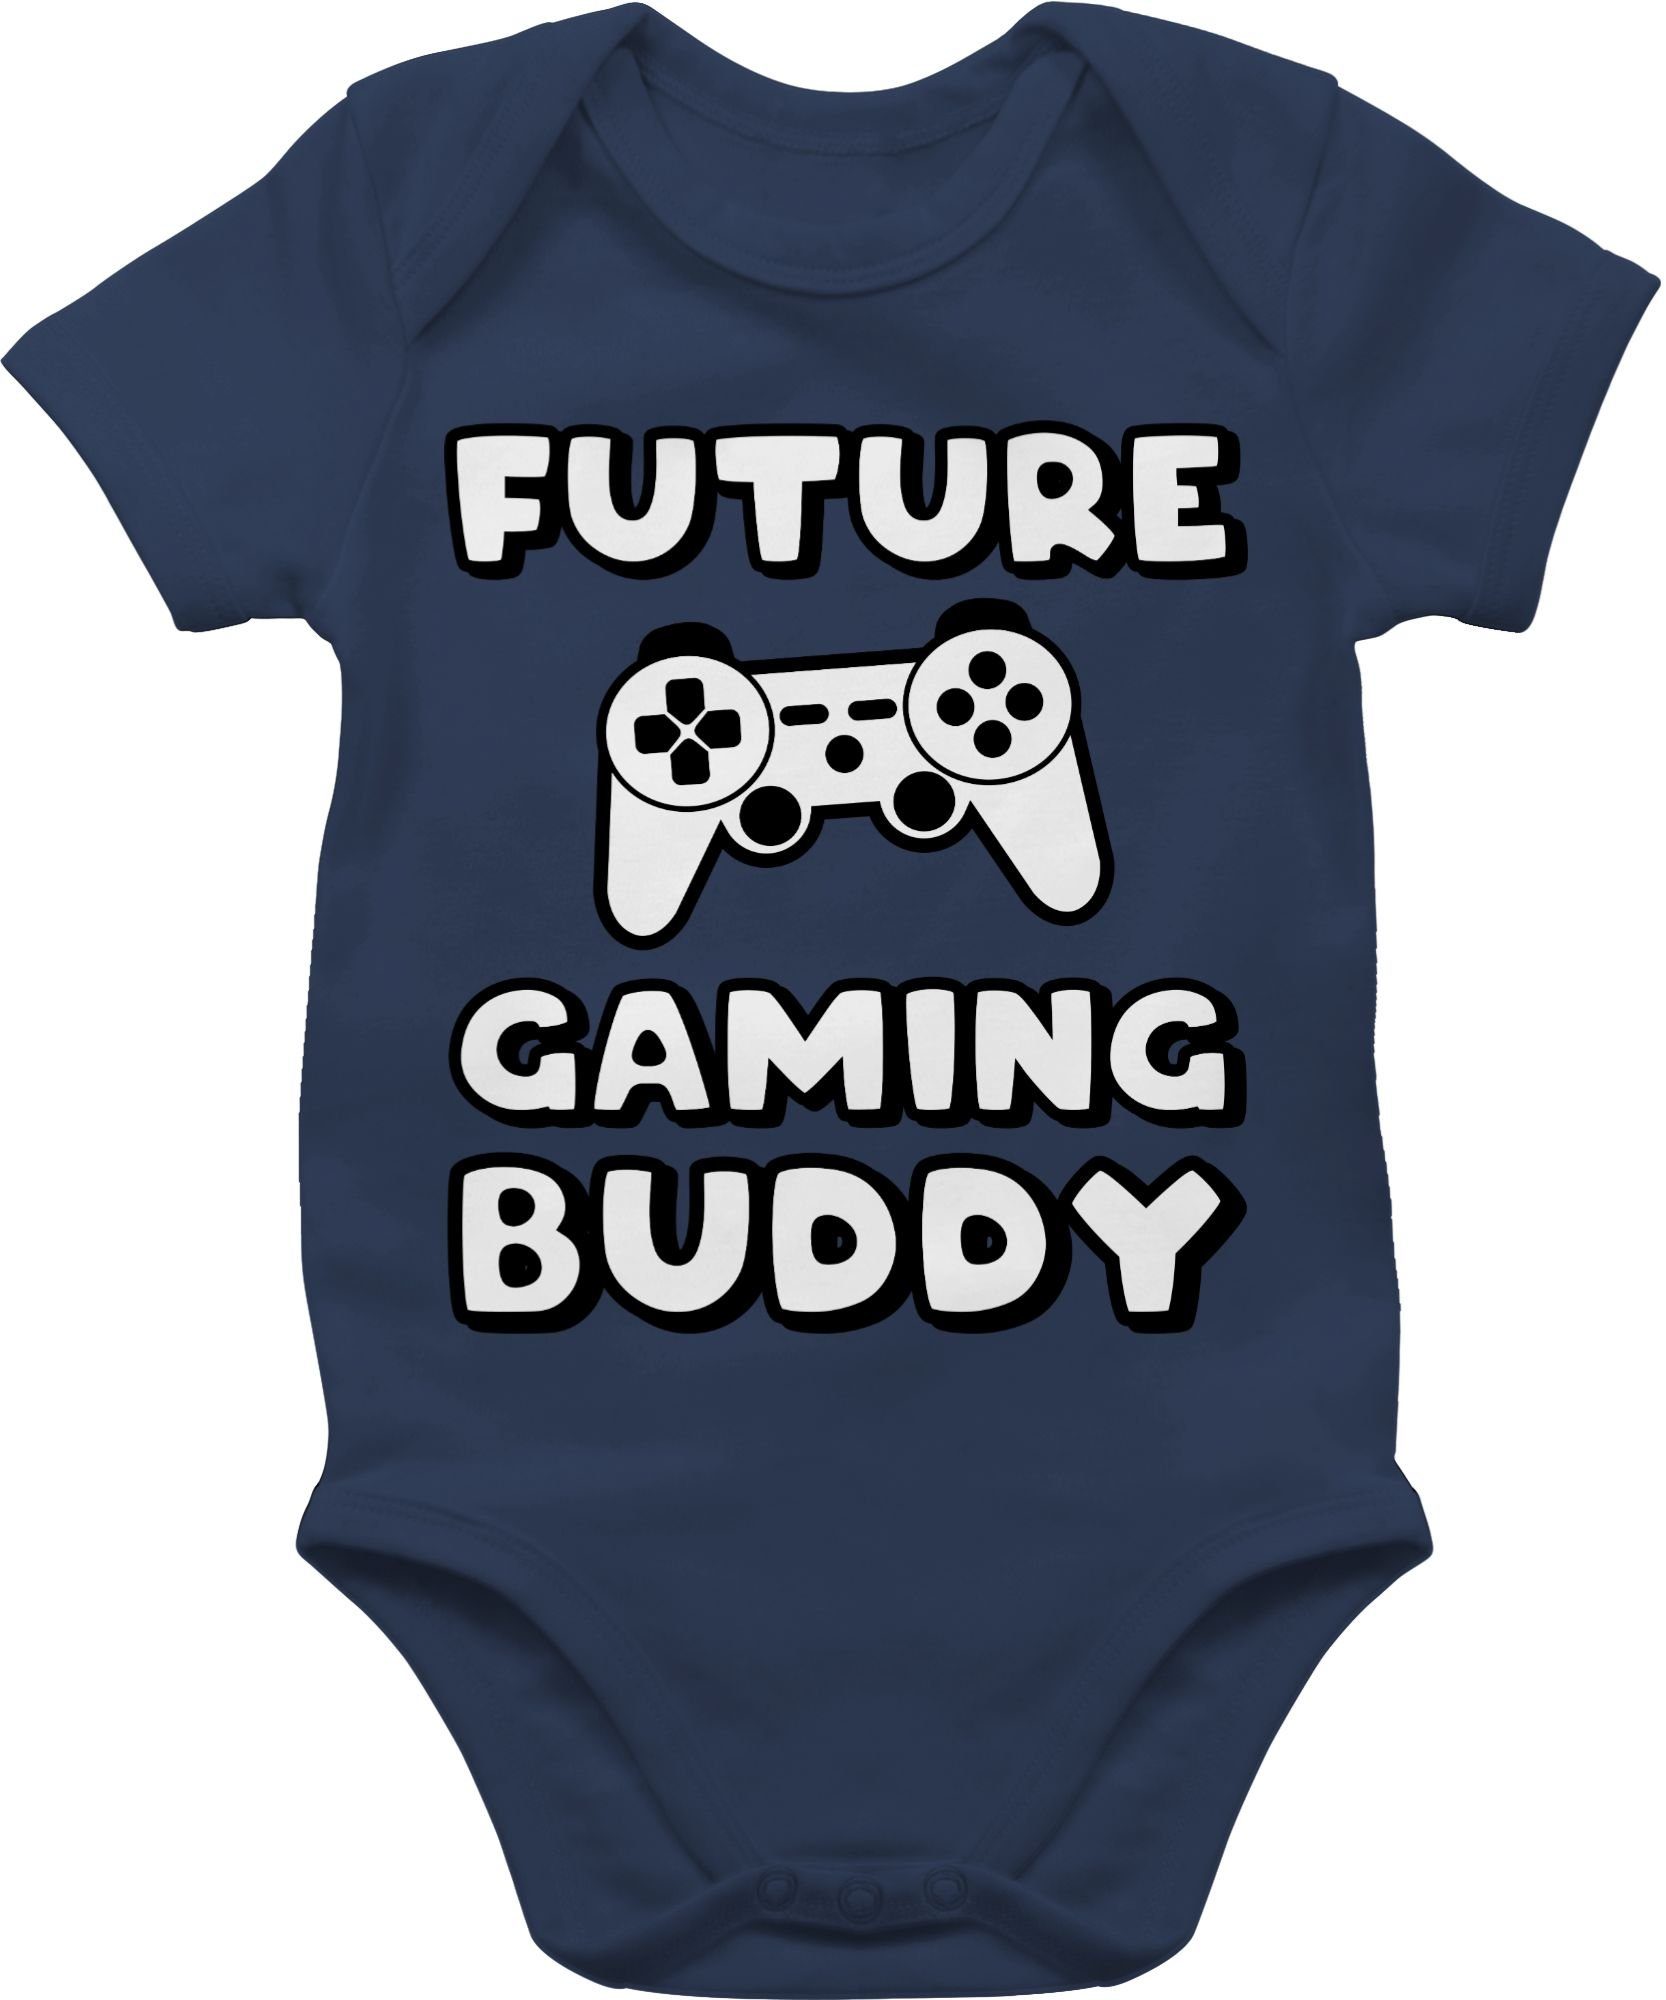 Sprüche Navy Buddy Baby Future Shirtbody Blau Gaming Shirtracer 2